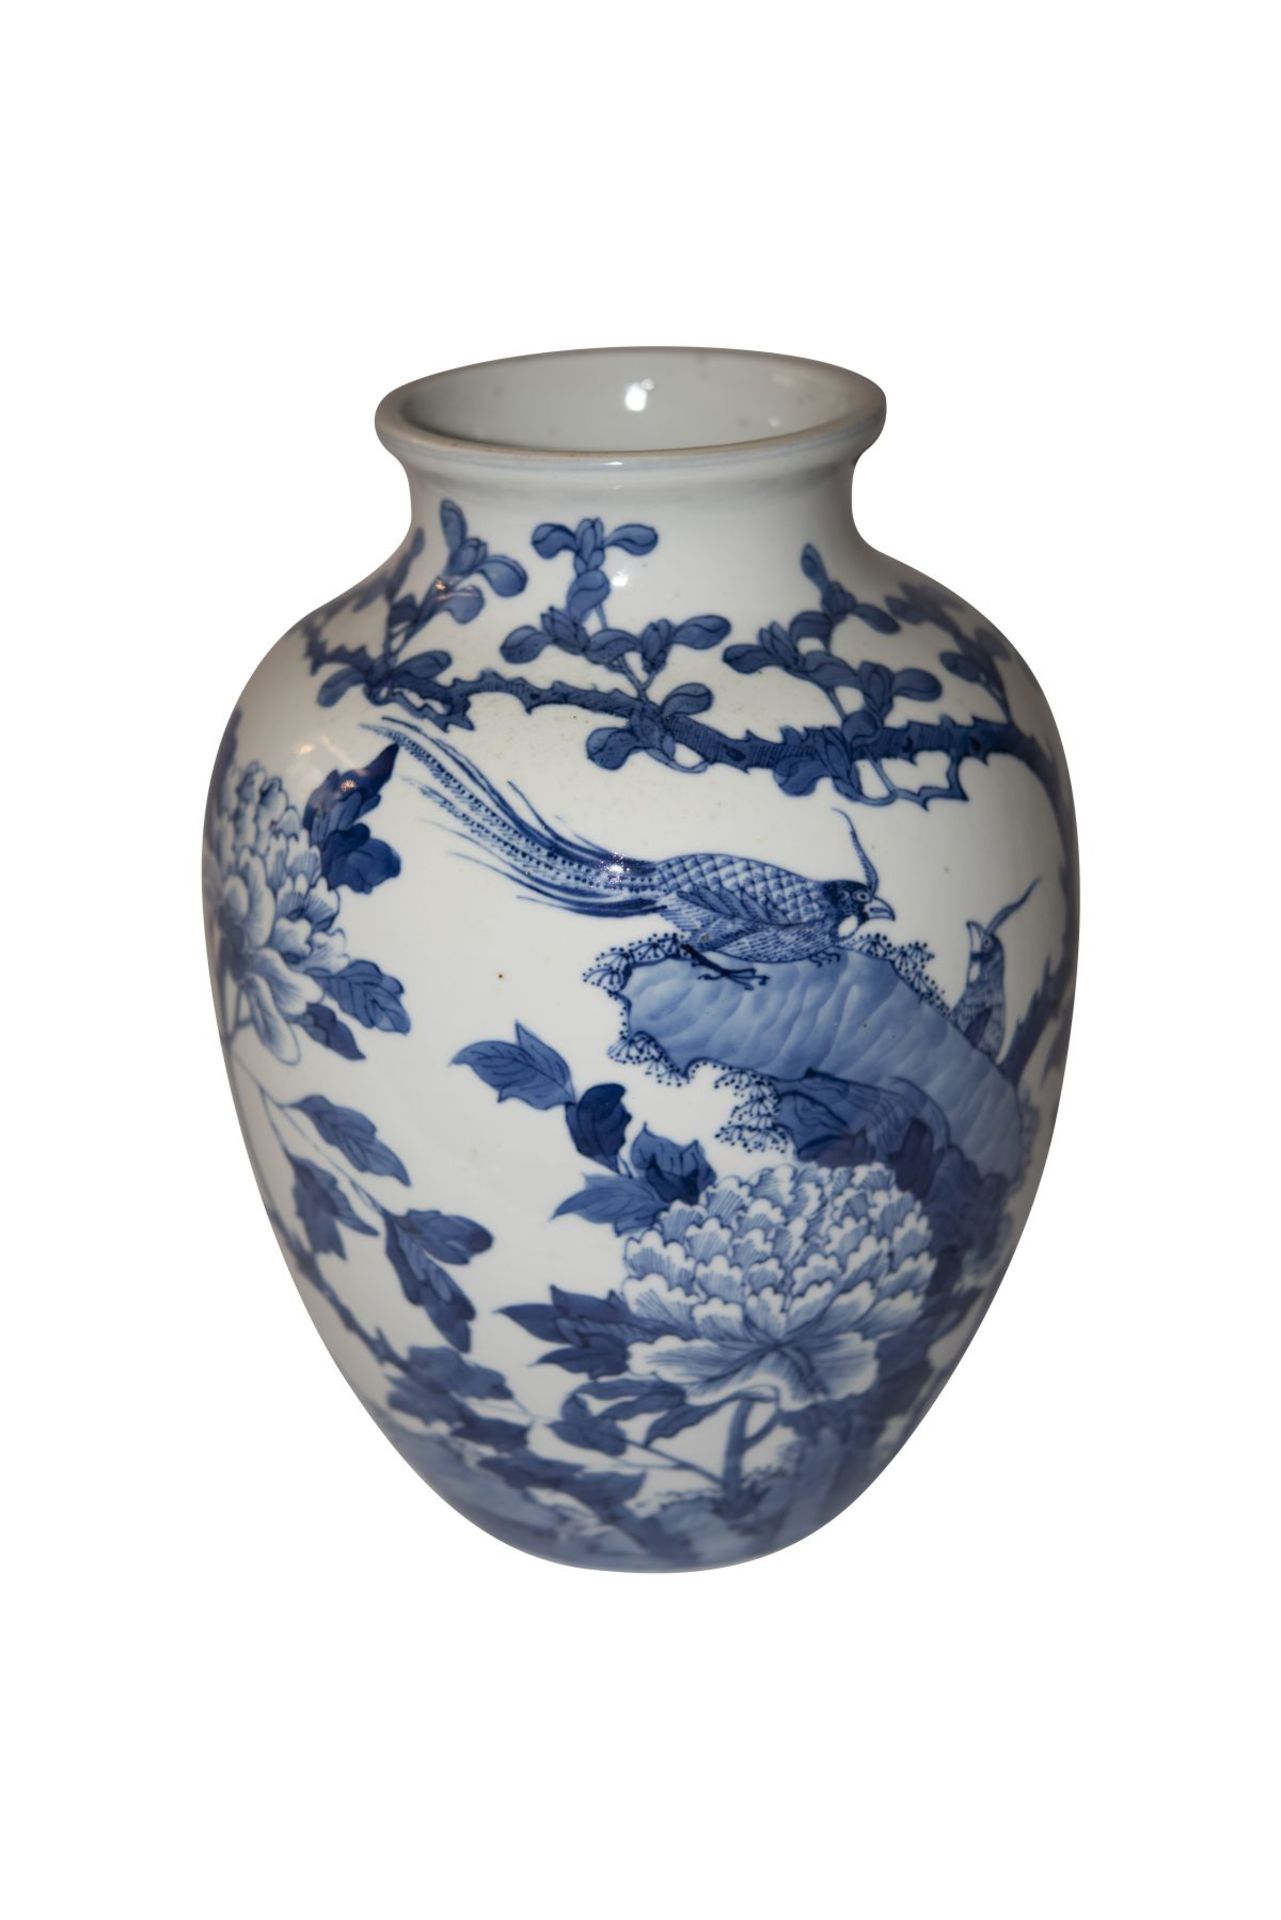 Blue and white vase - Image 8 of 8